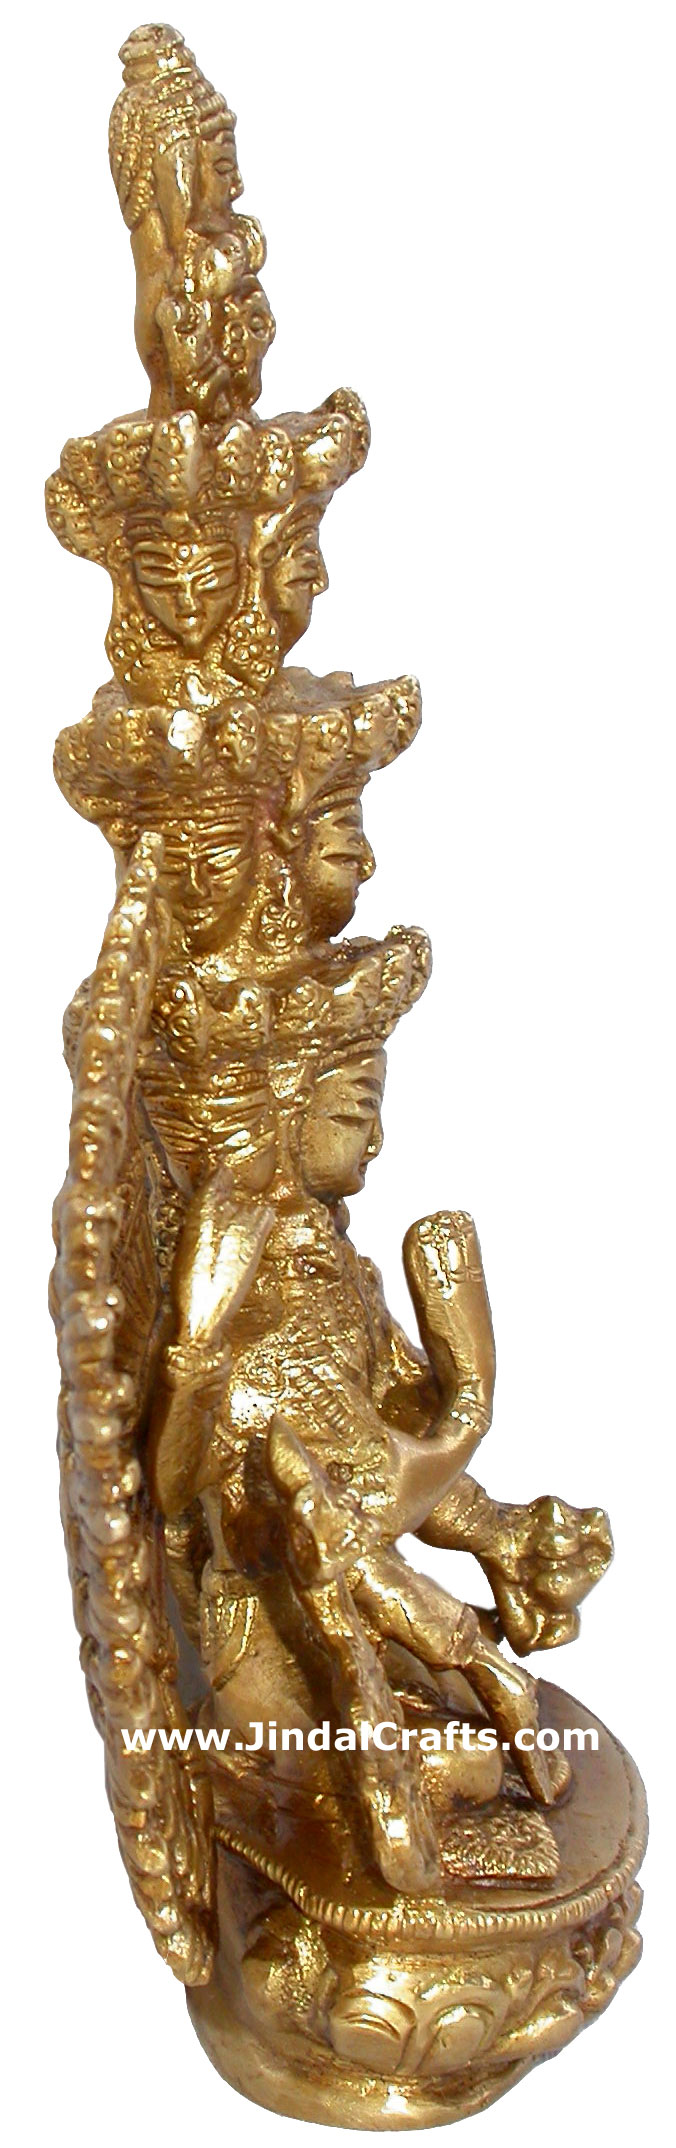 Tara Statue Buddhism Tibetan Religious Sculpture Arts Indian Handicrafts Crafts